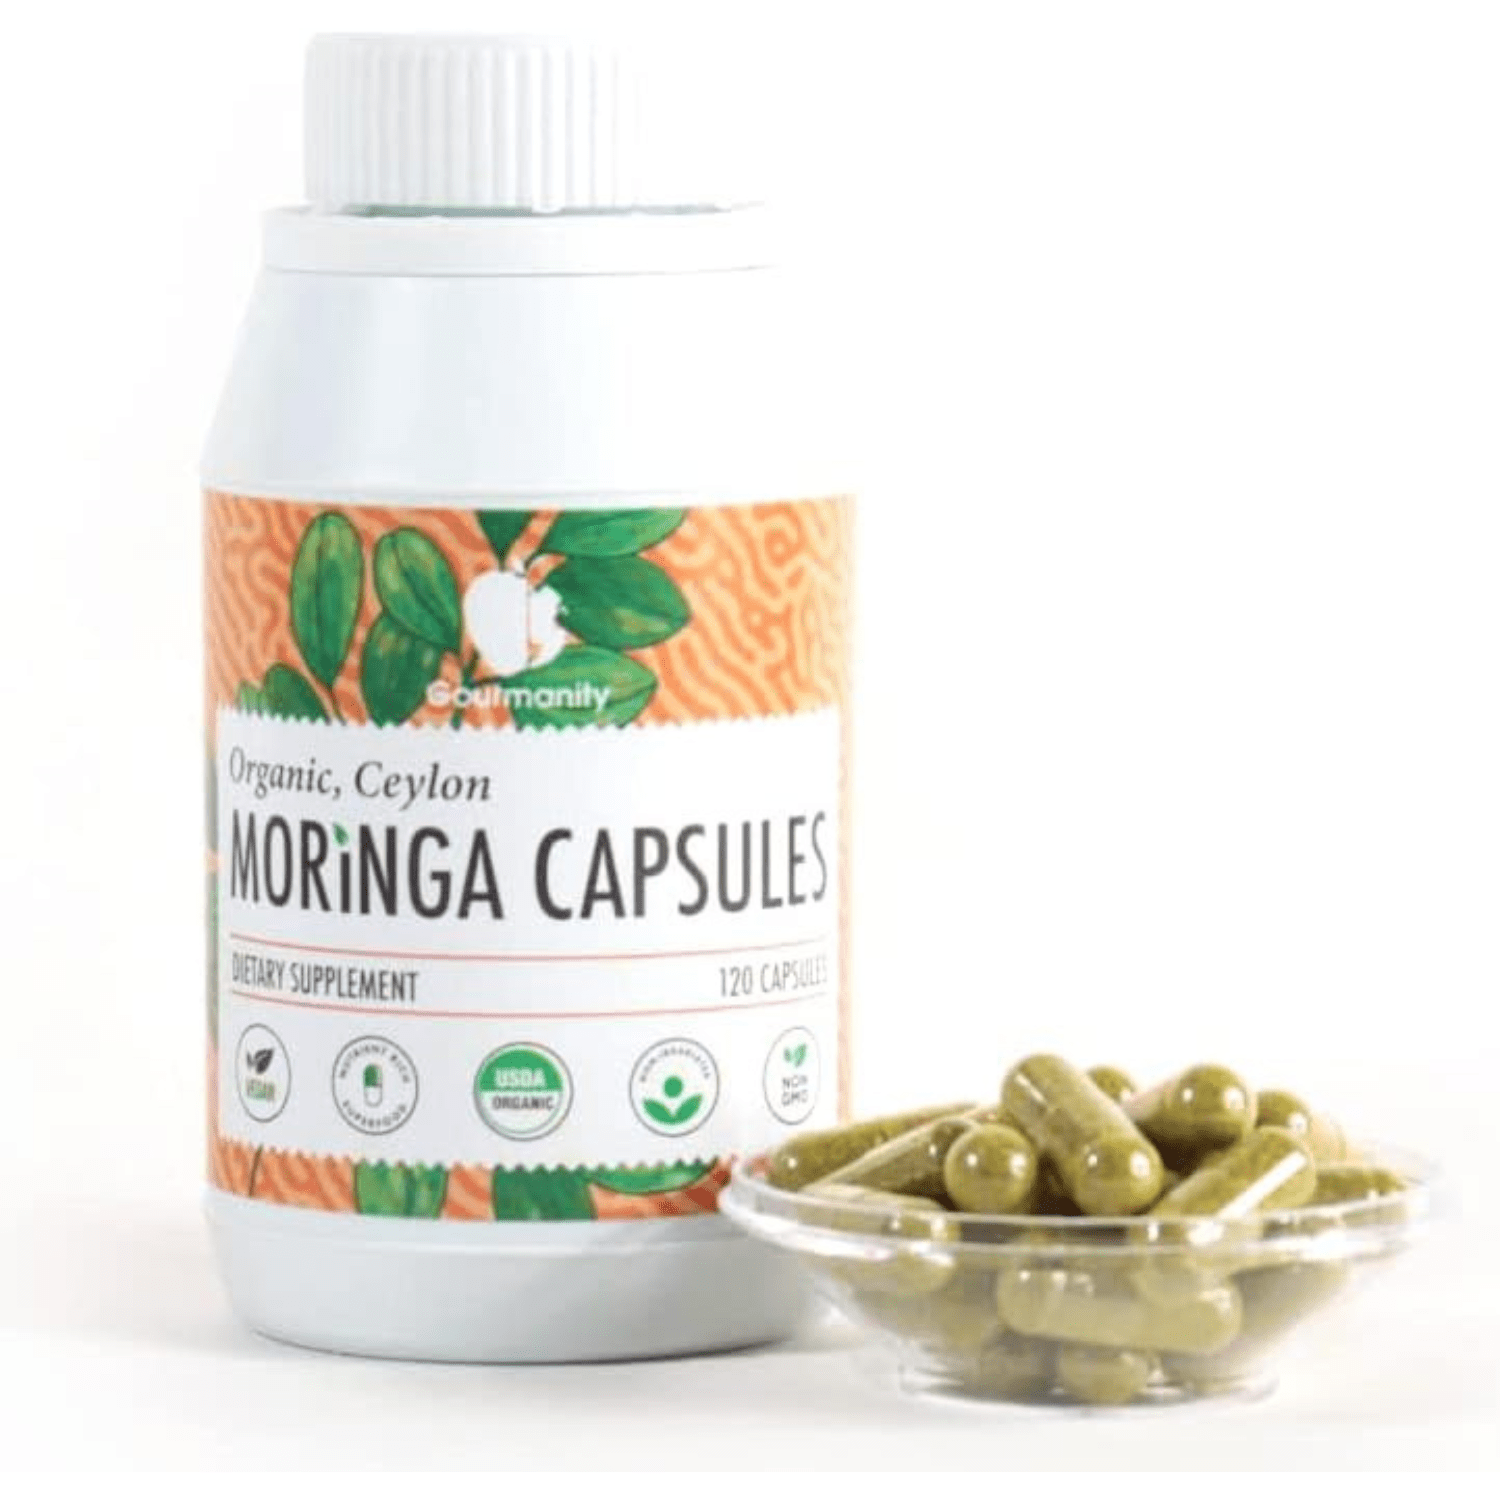 Gourmanity Organic Ceylon Vegan Moringa 120 Capsules - Gourmanity